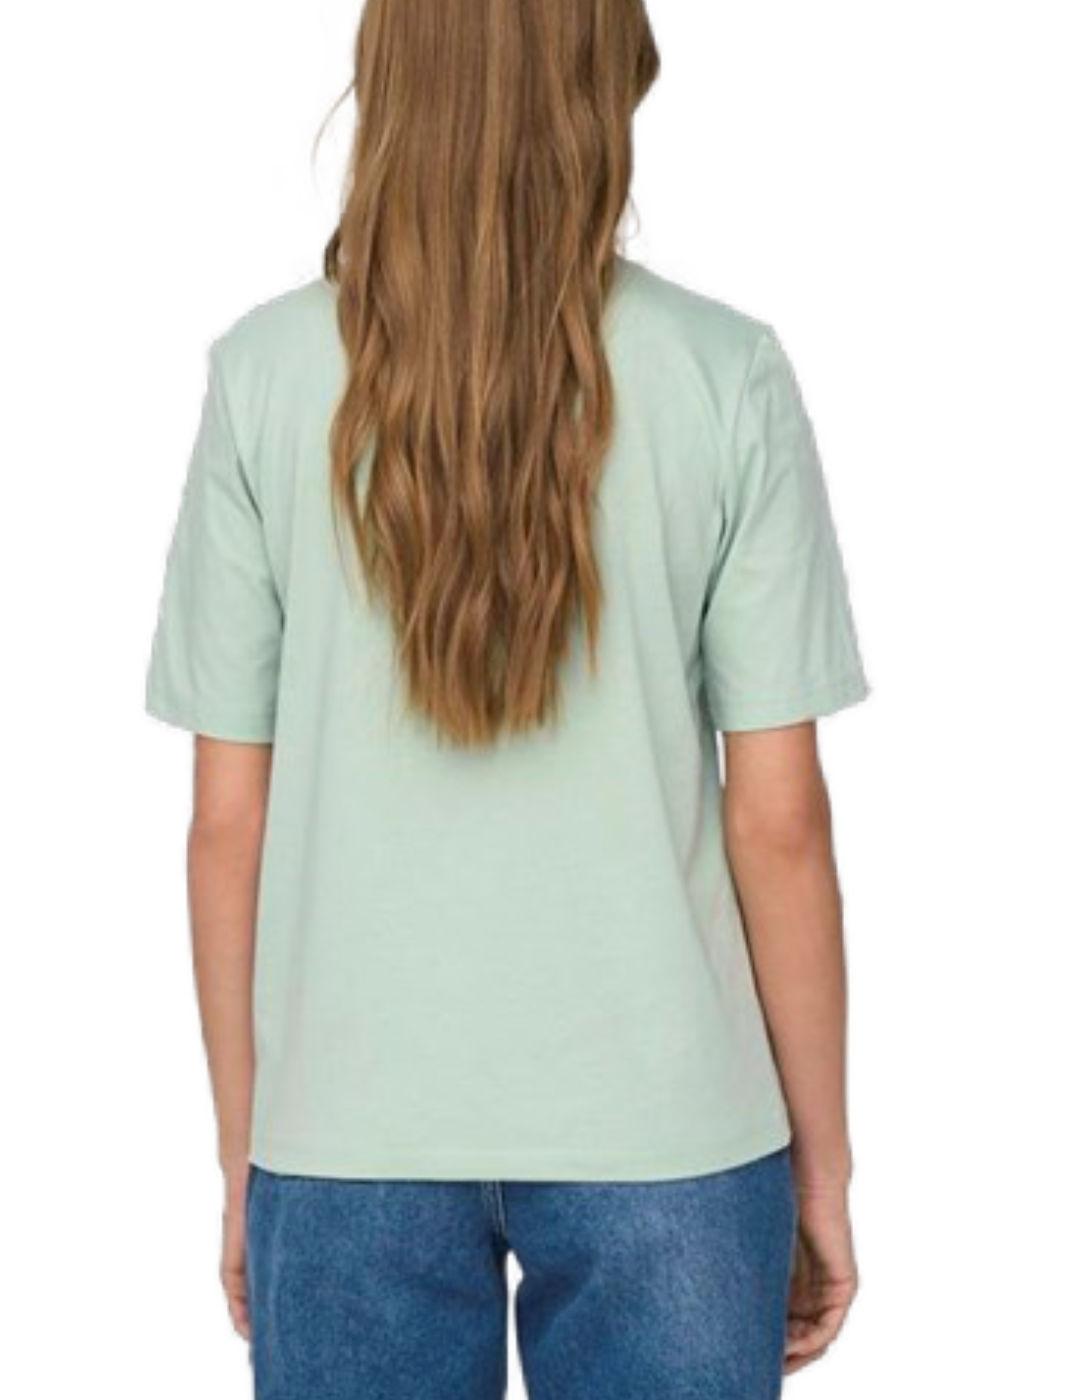 Camiseta Only verde agua manga corta para mujer